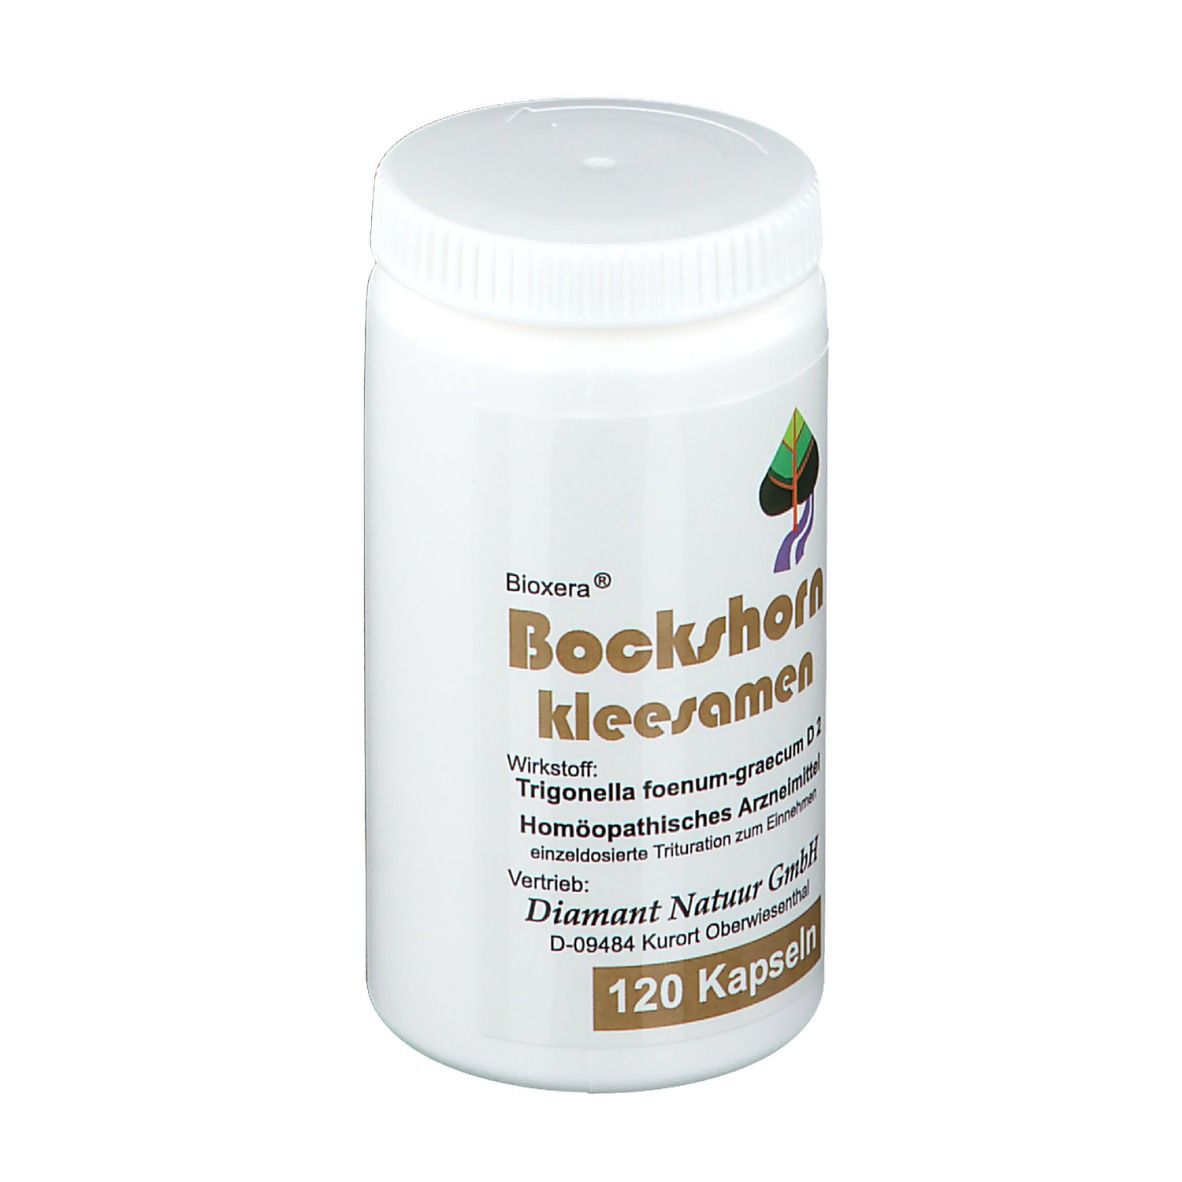 Bioxera® Bockshornkleesamen